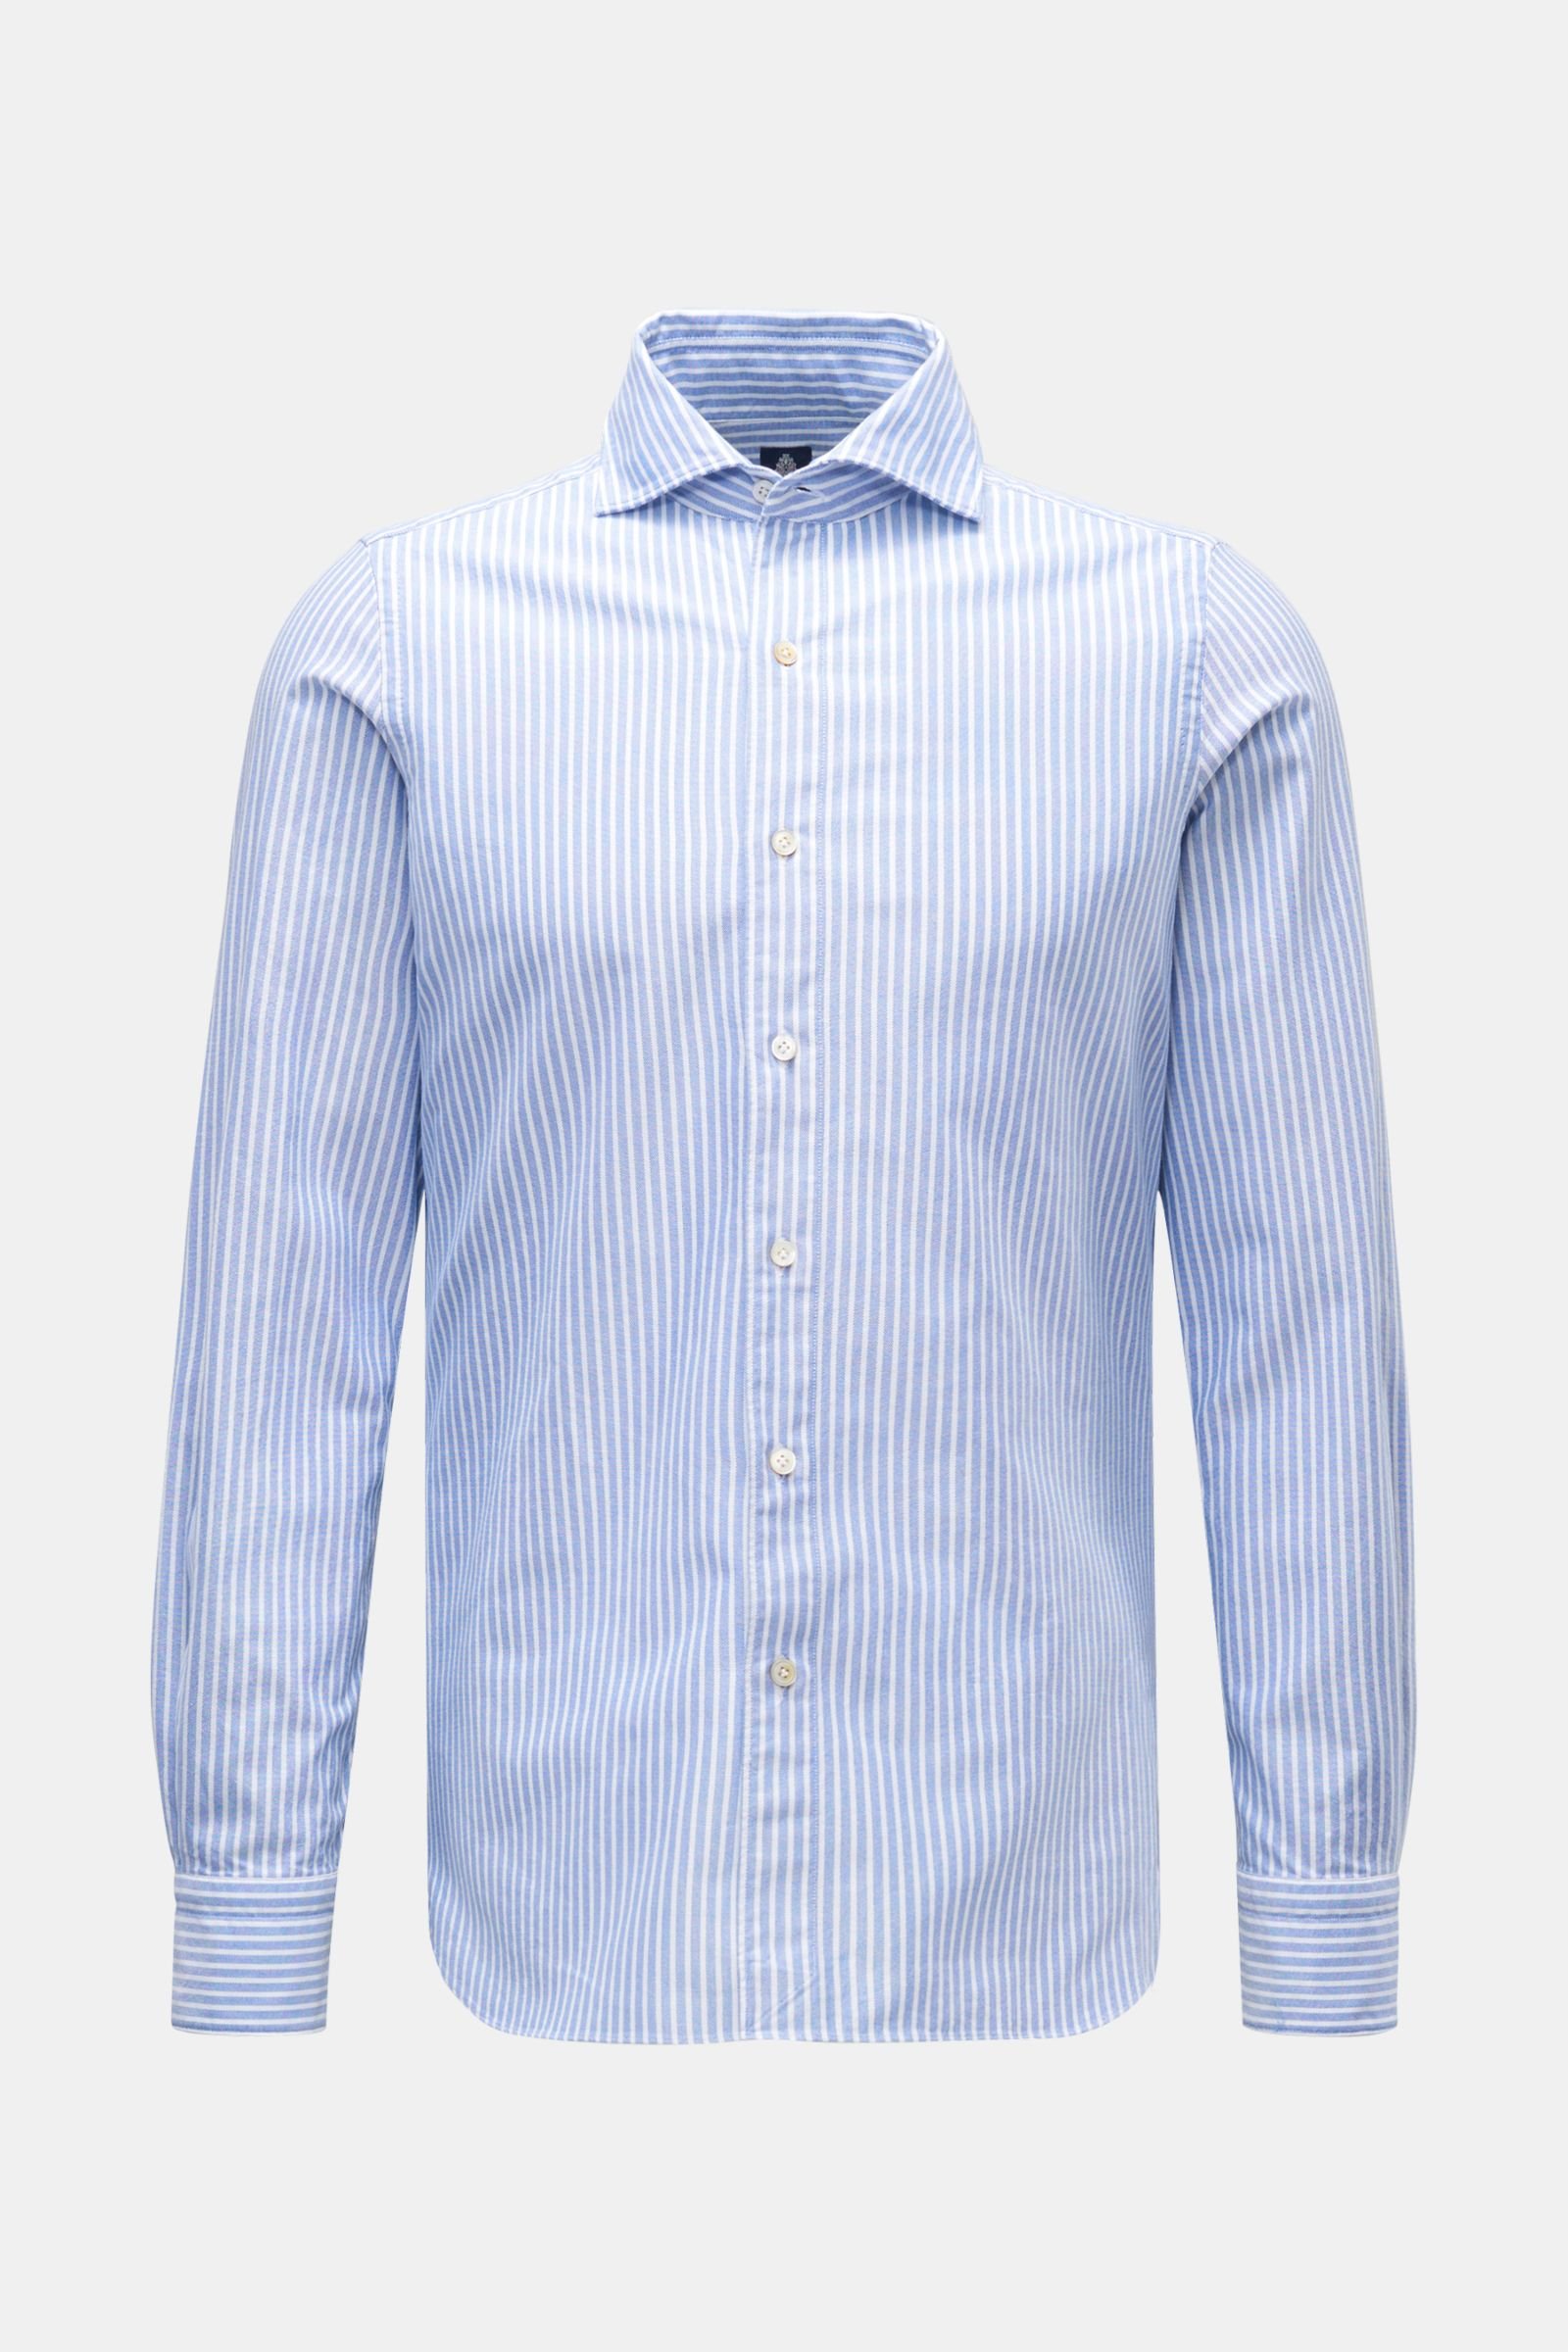 Oxford shirt 'Edoardo Gaeta' shark collar blue/white striped